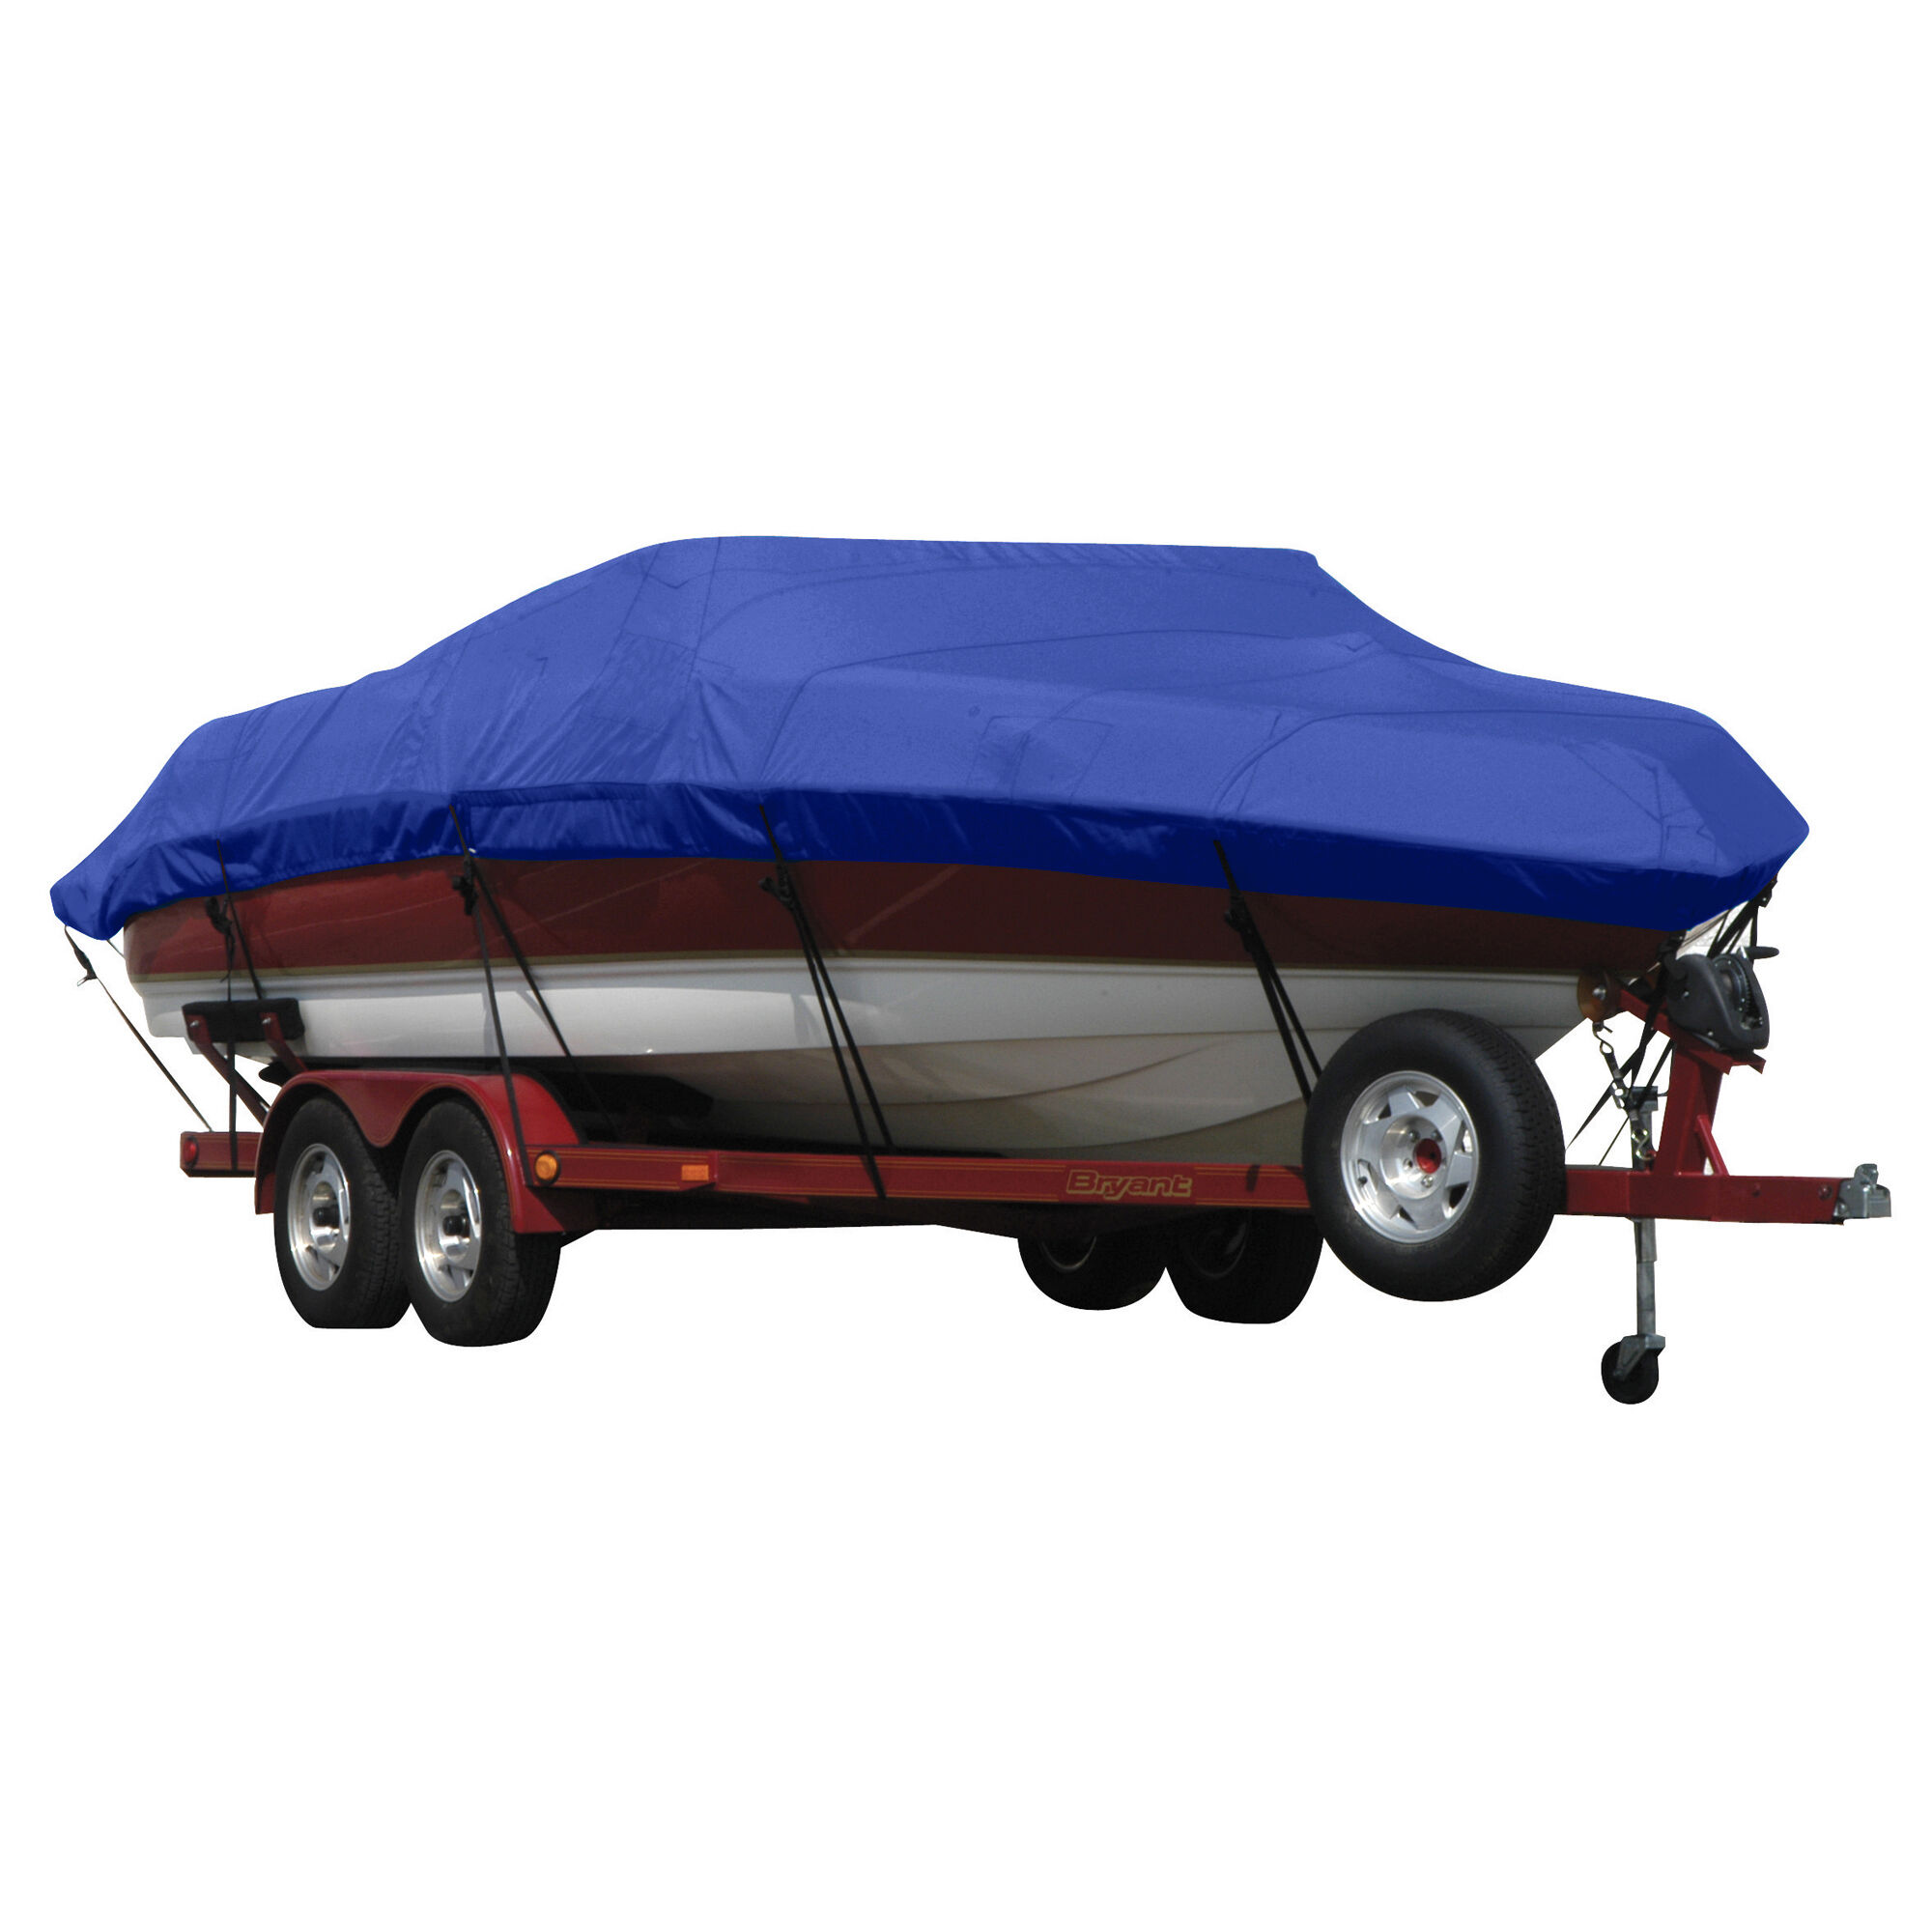 Covermate Exact Fit Sunbrella Boat Cover for Seaswirl Striper 2150 Striper 2150 Walkaround Hard Top I/O. Ocean Blue